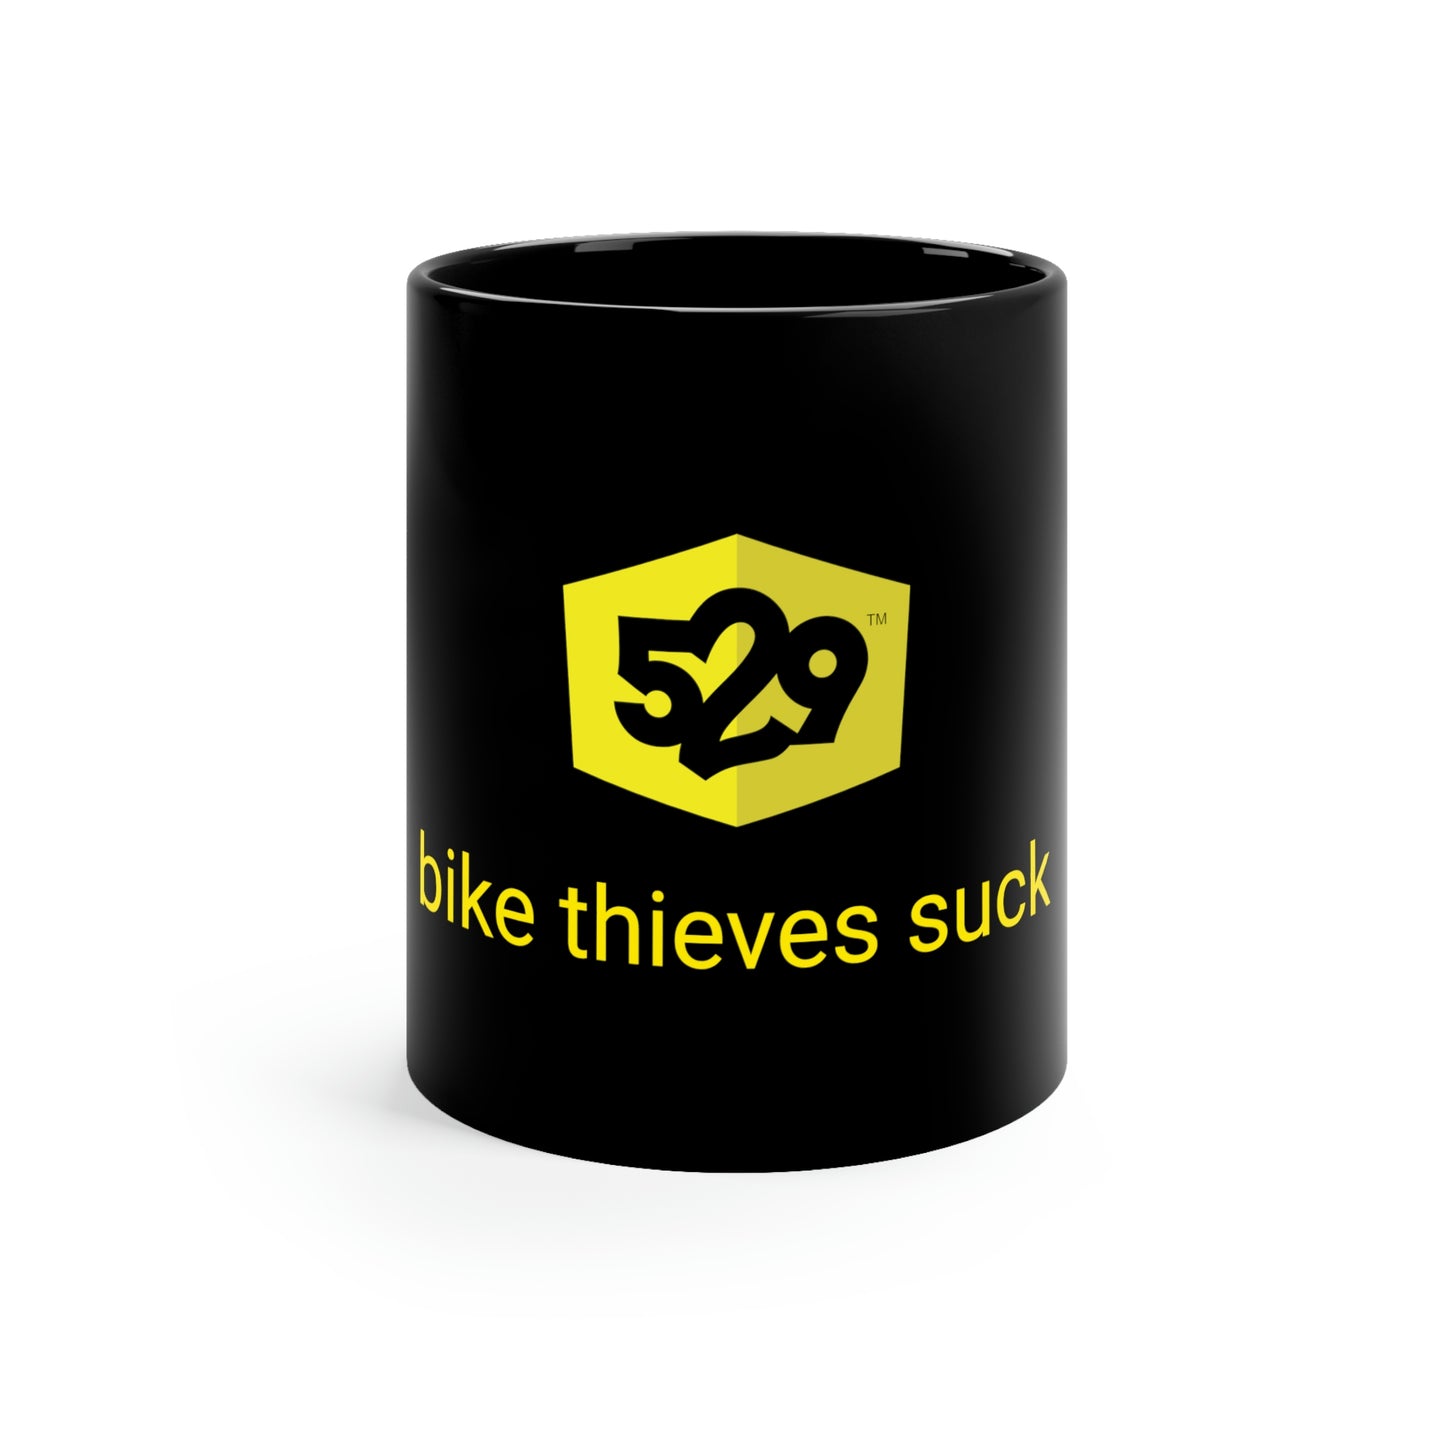 Bike thieves suck mug